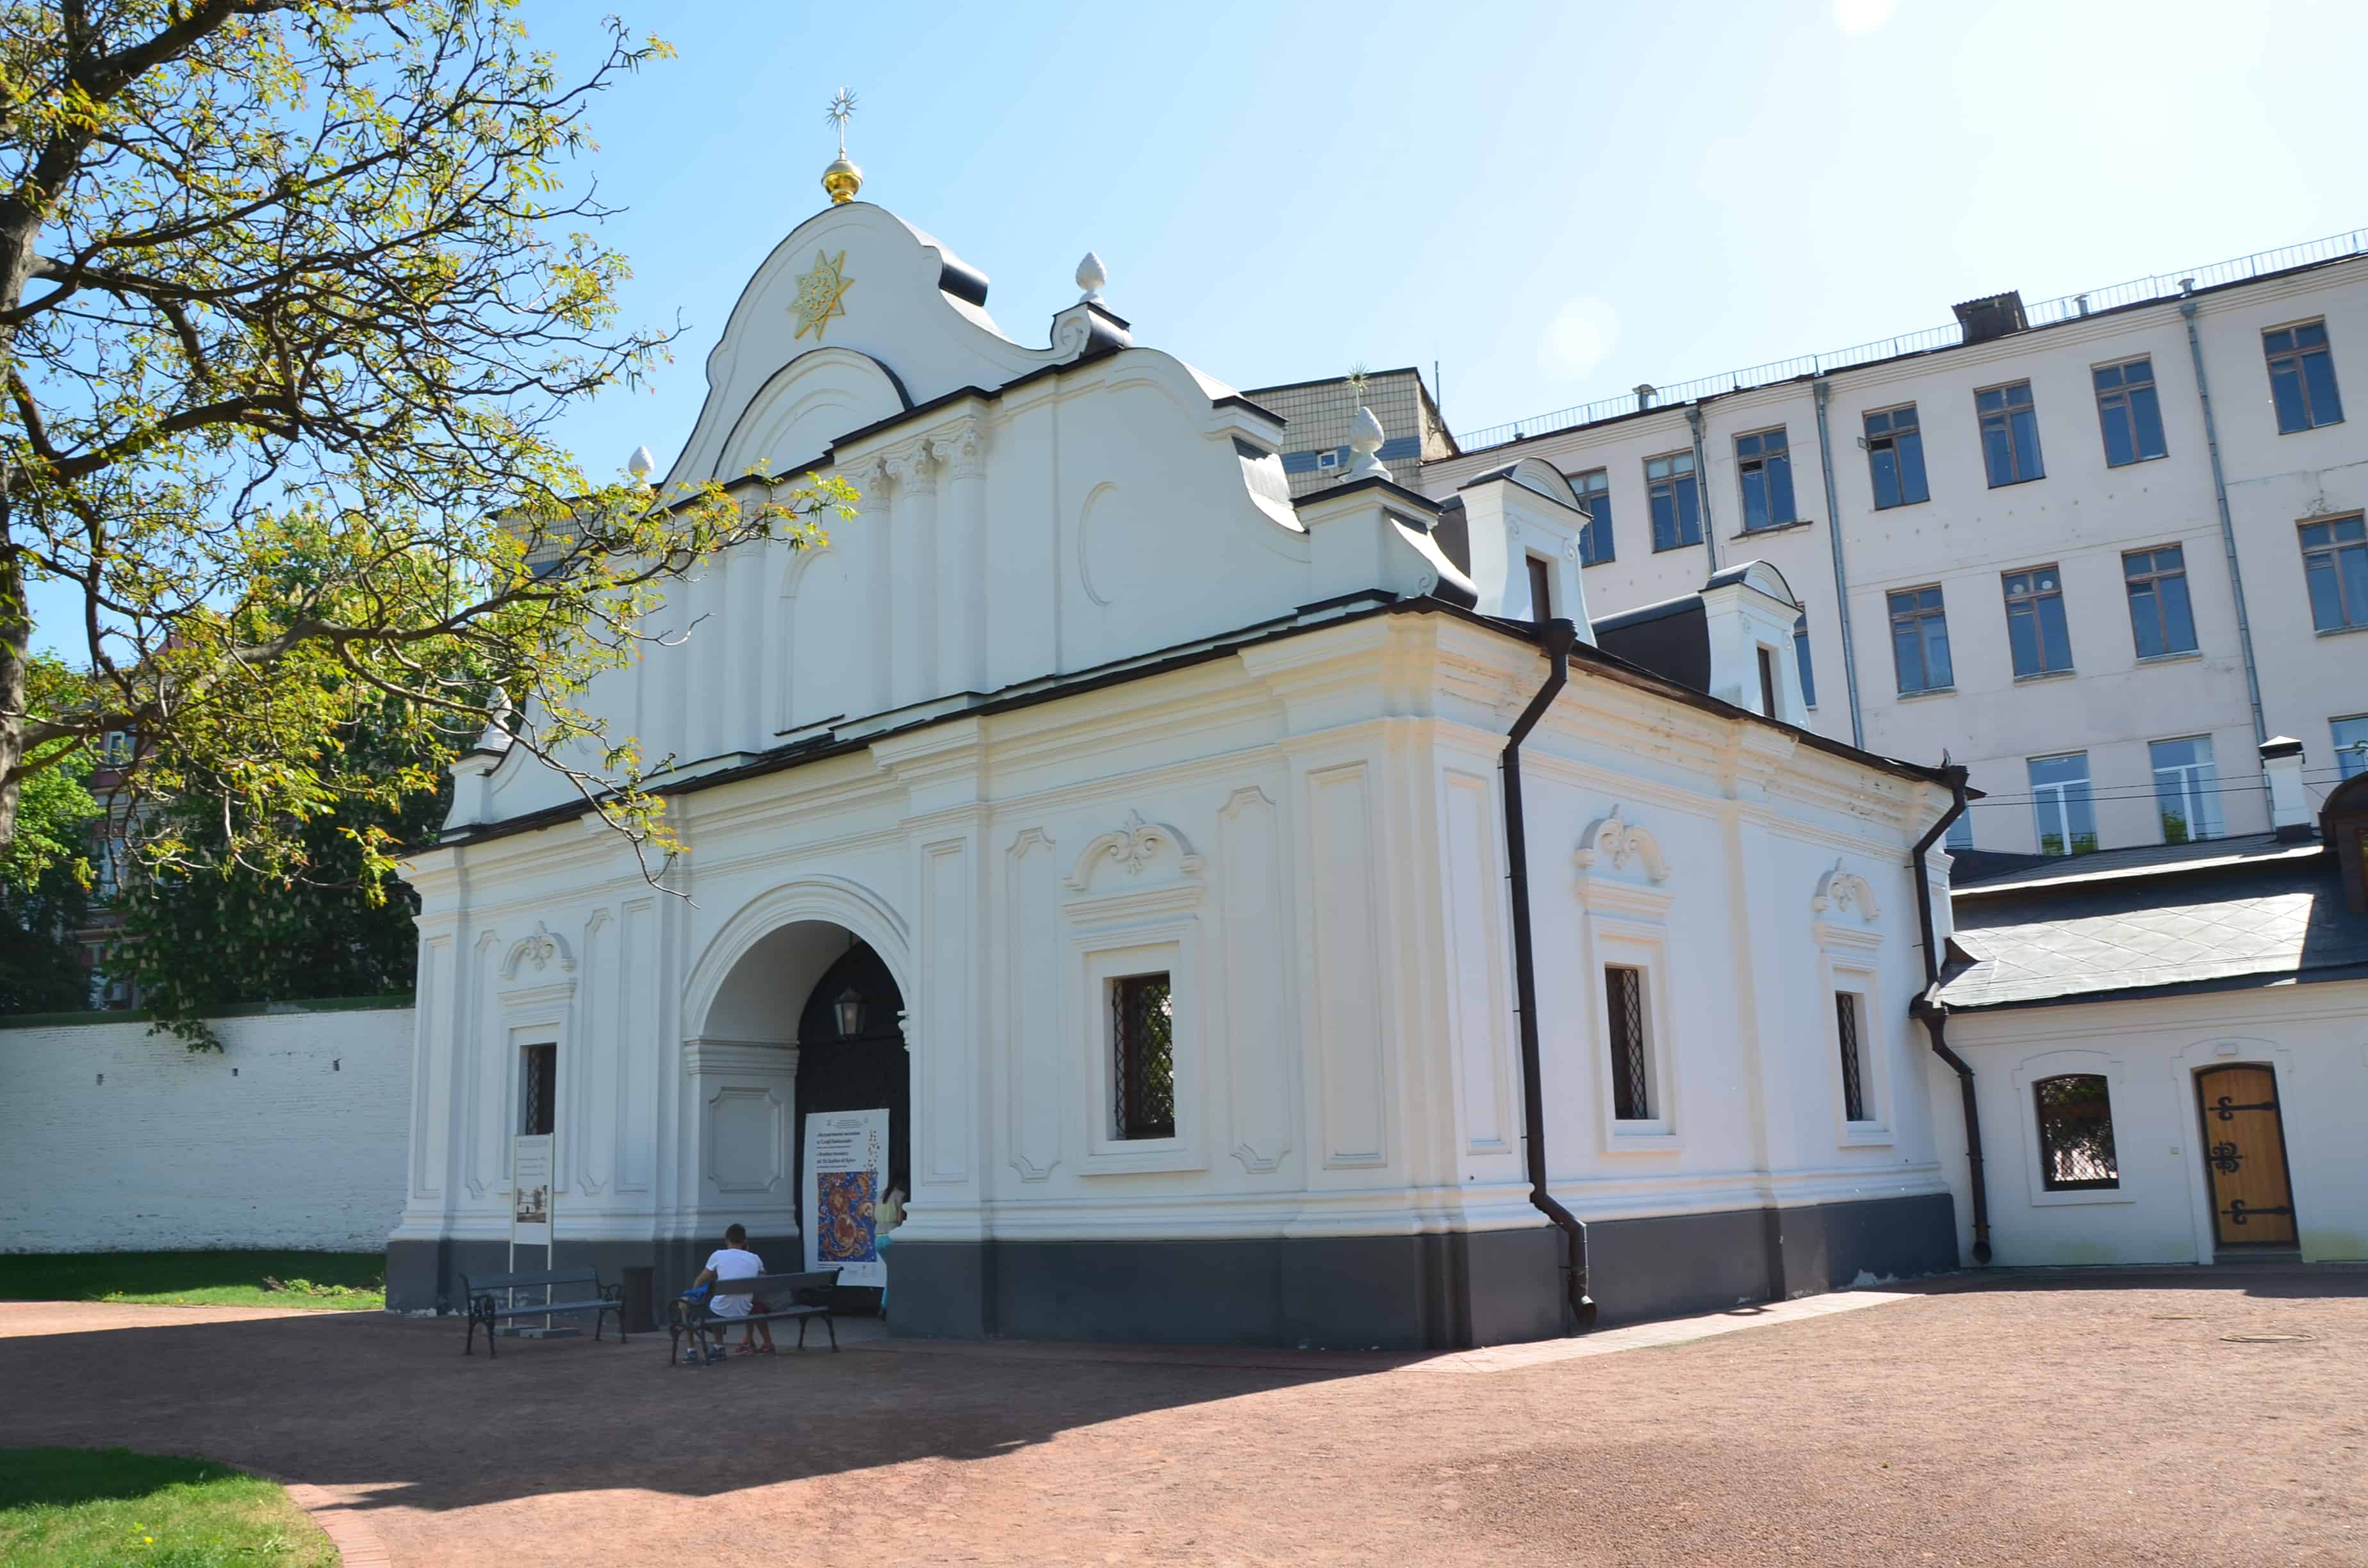 Zaborovskyi Gate at Saint Sophia Cathedral complex in Kyiv, Ukraine